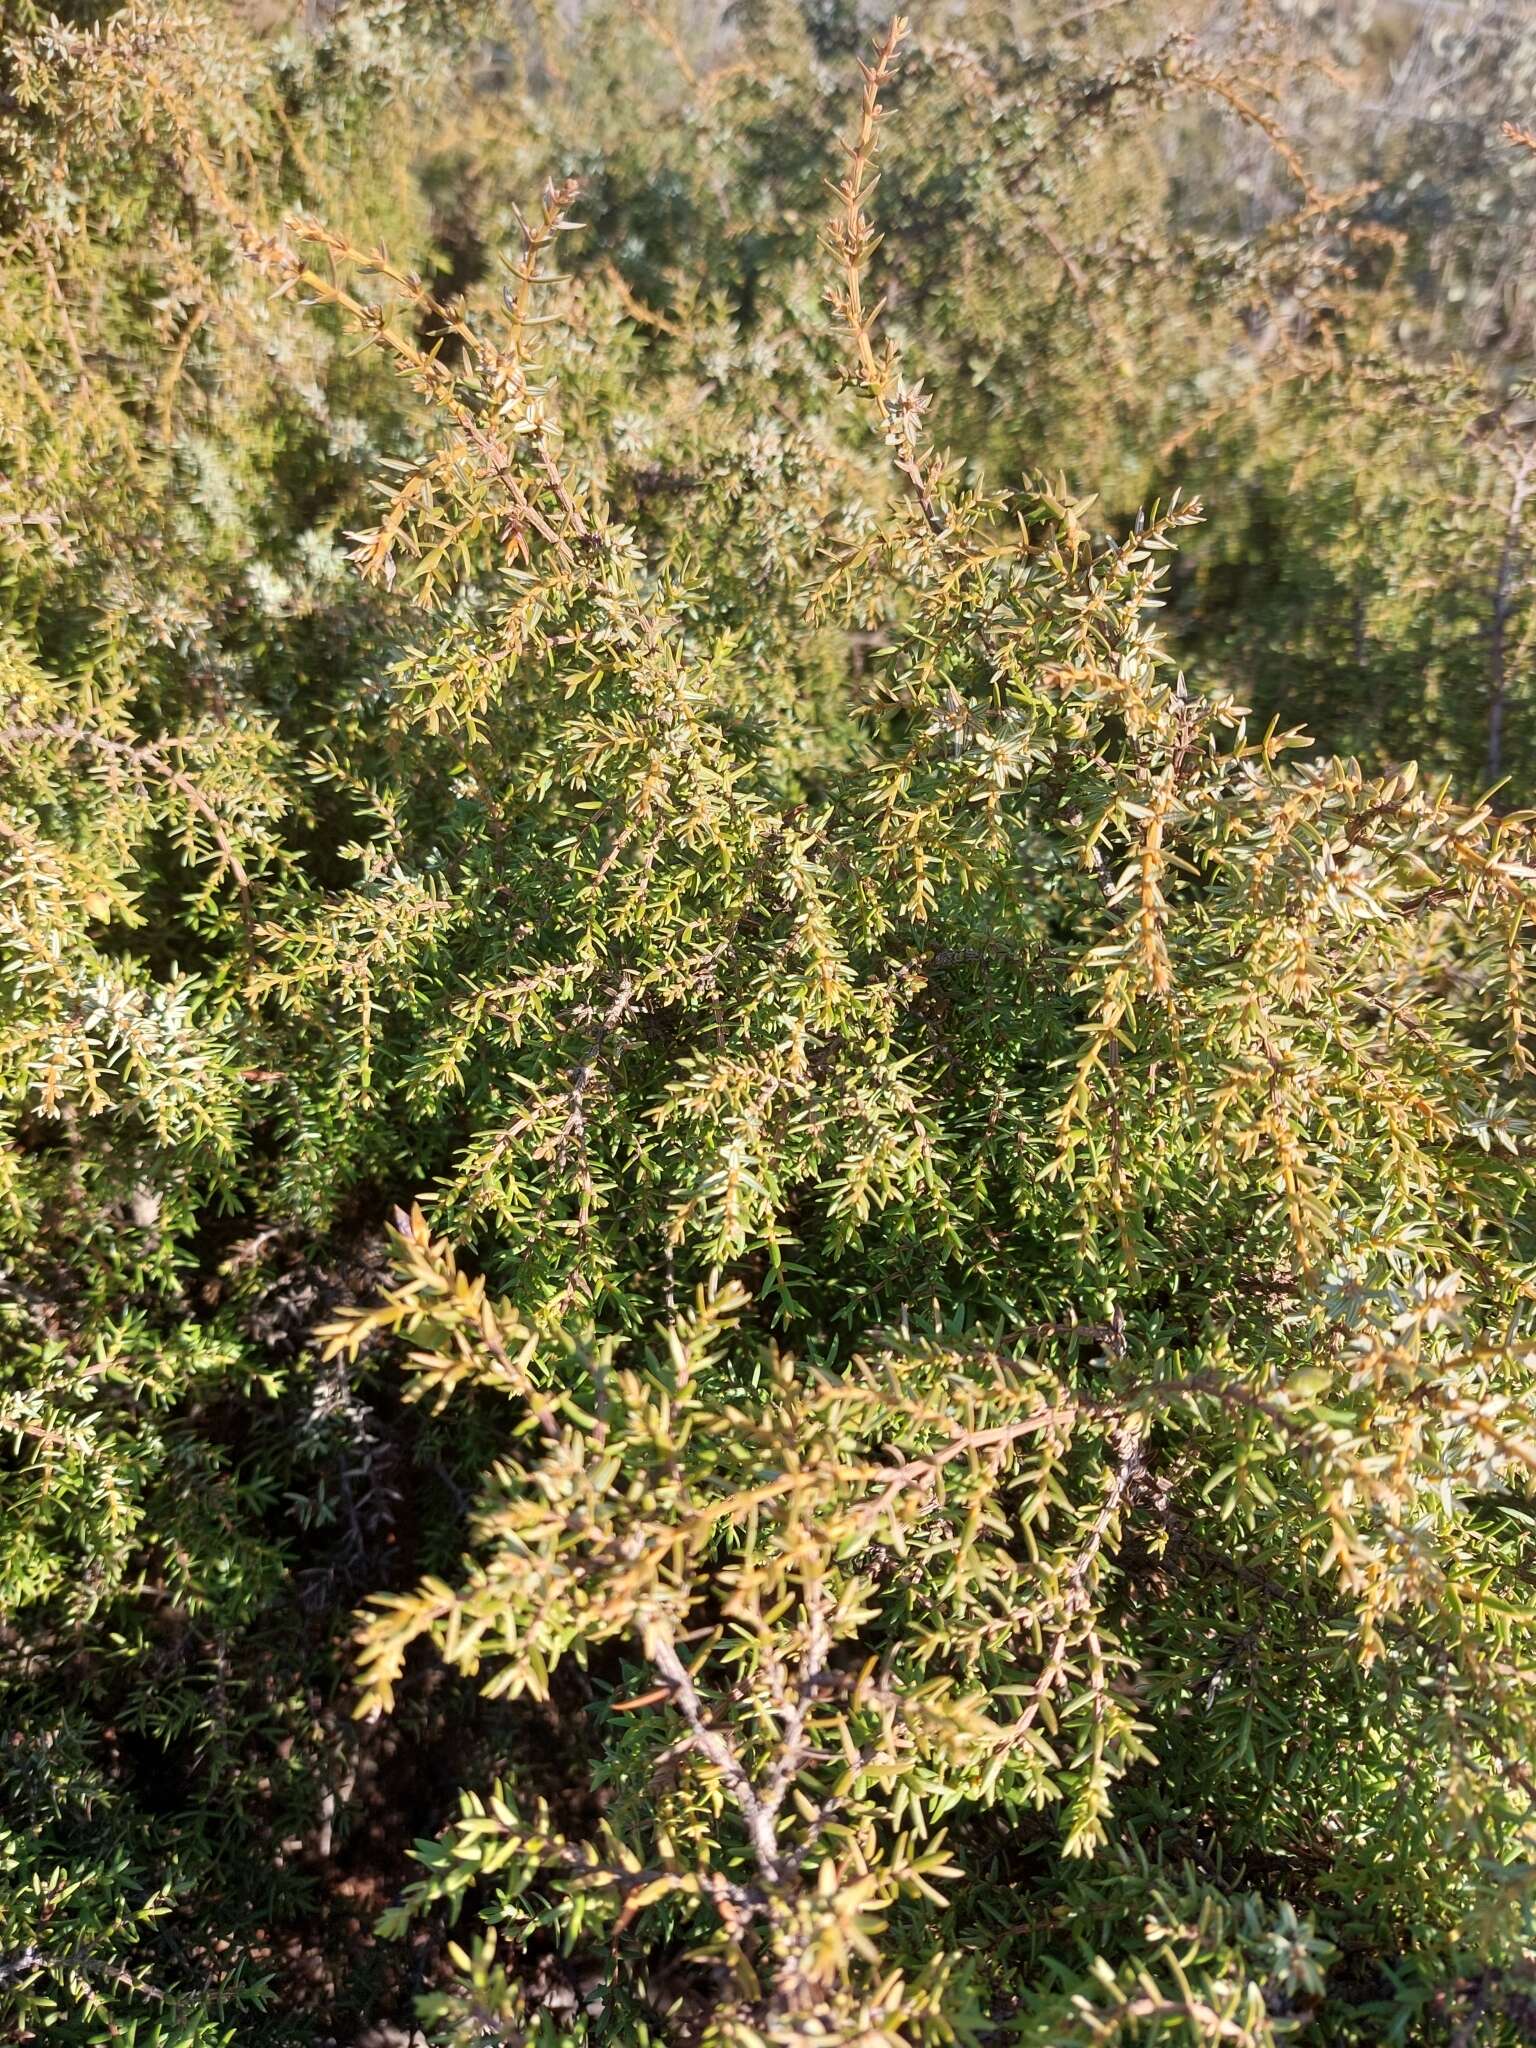 Image of Juniperus oxycedrus subsp. transtagana Franco